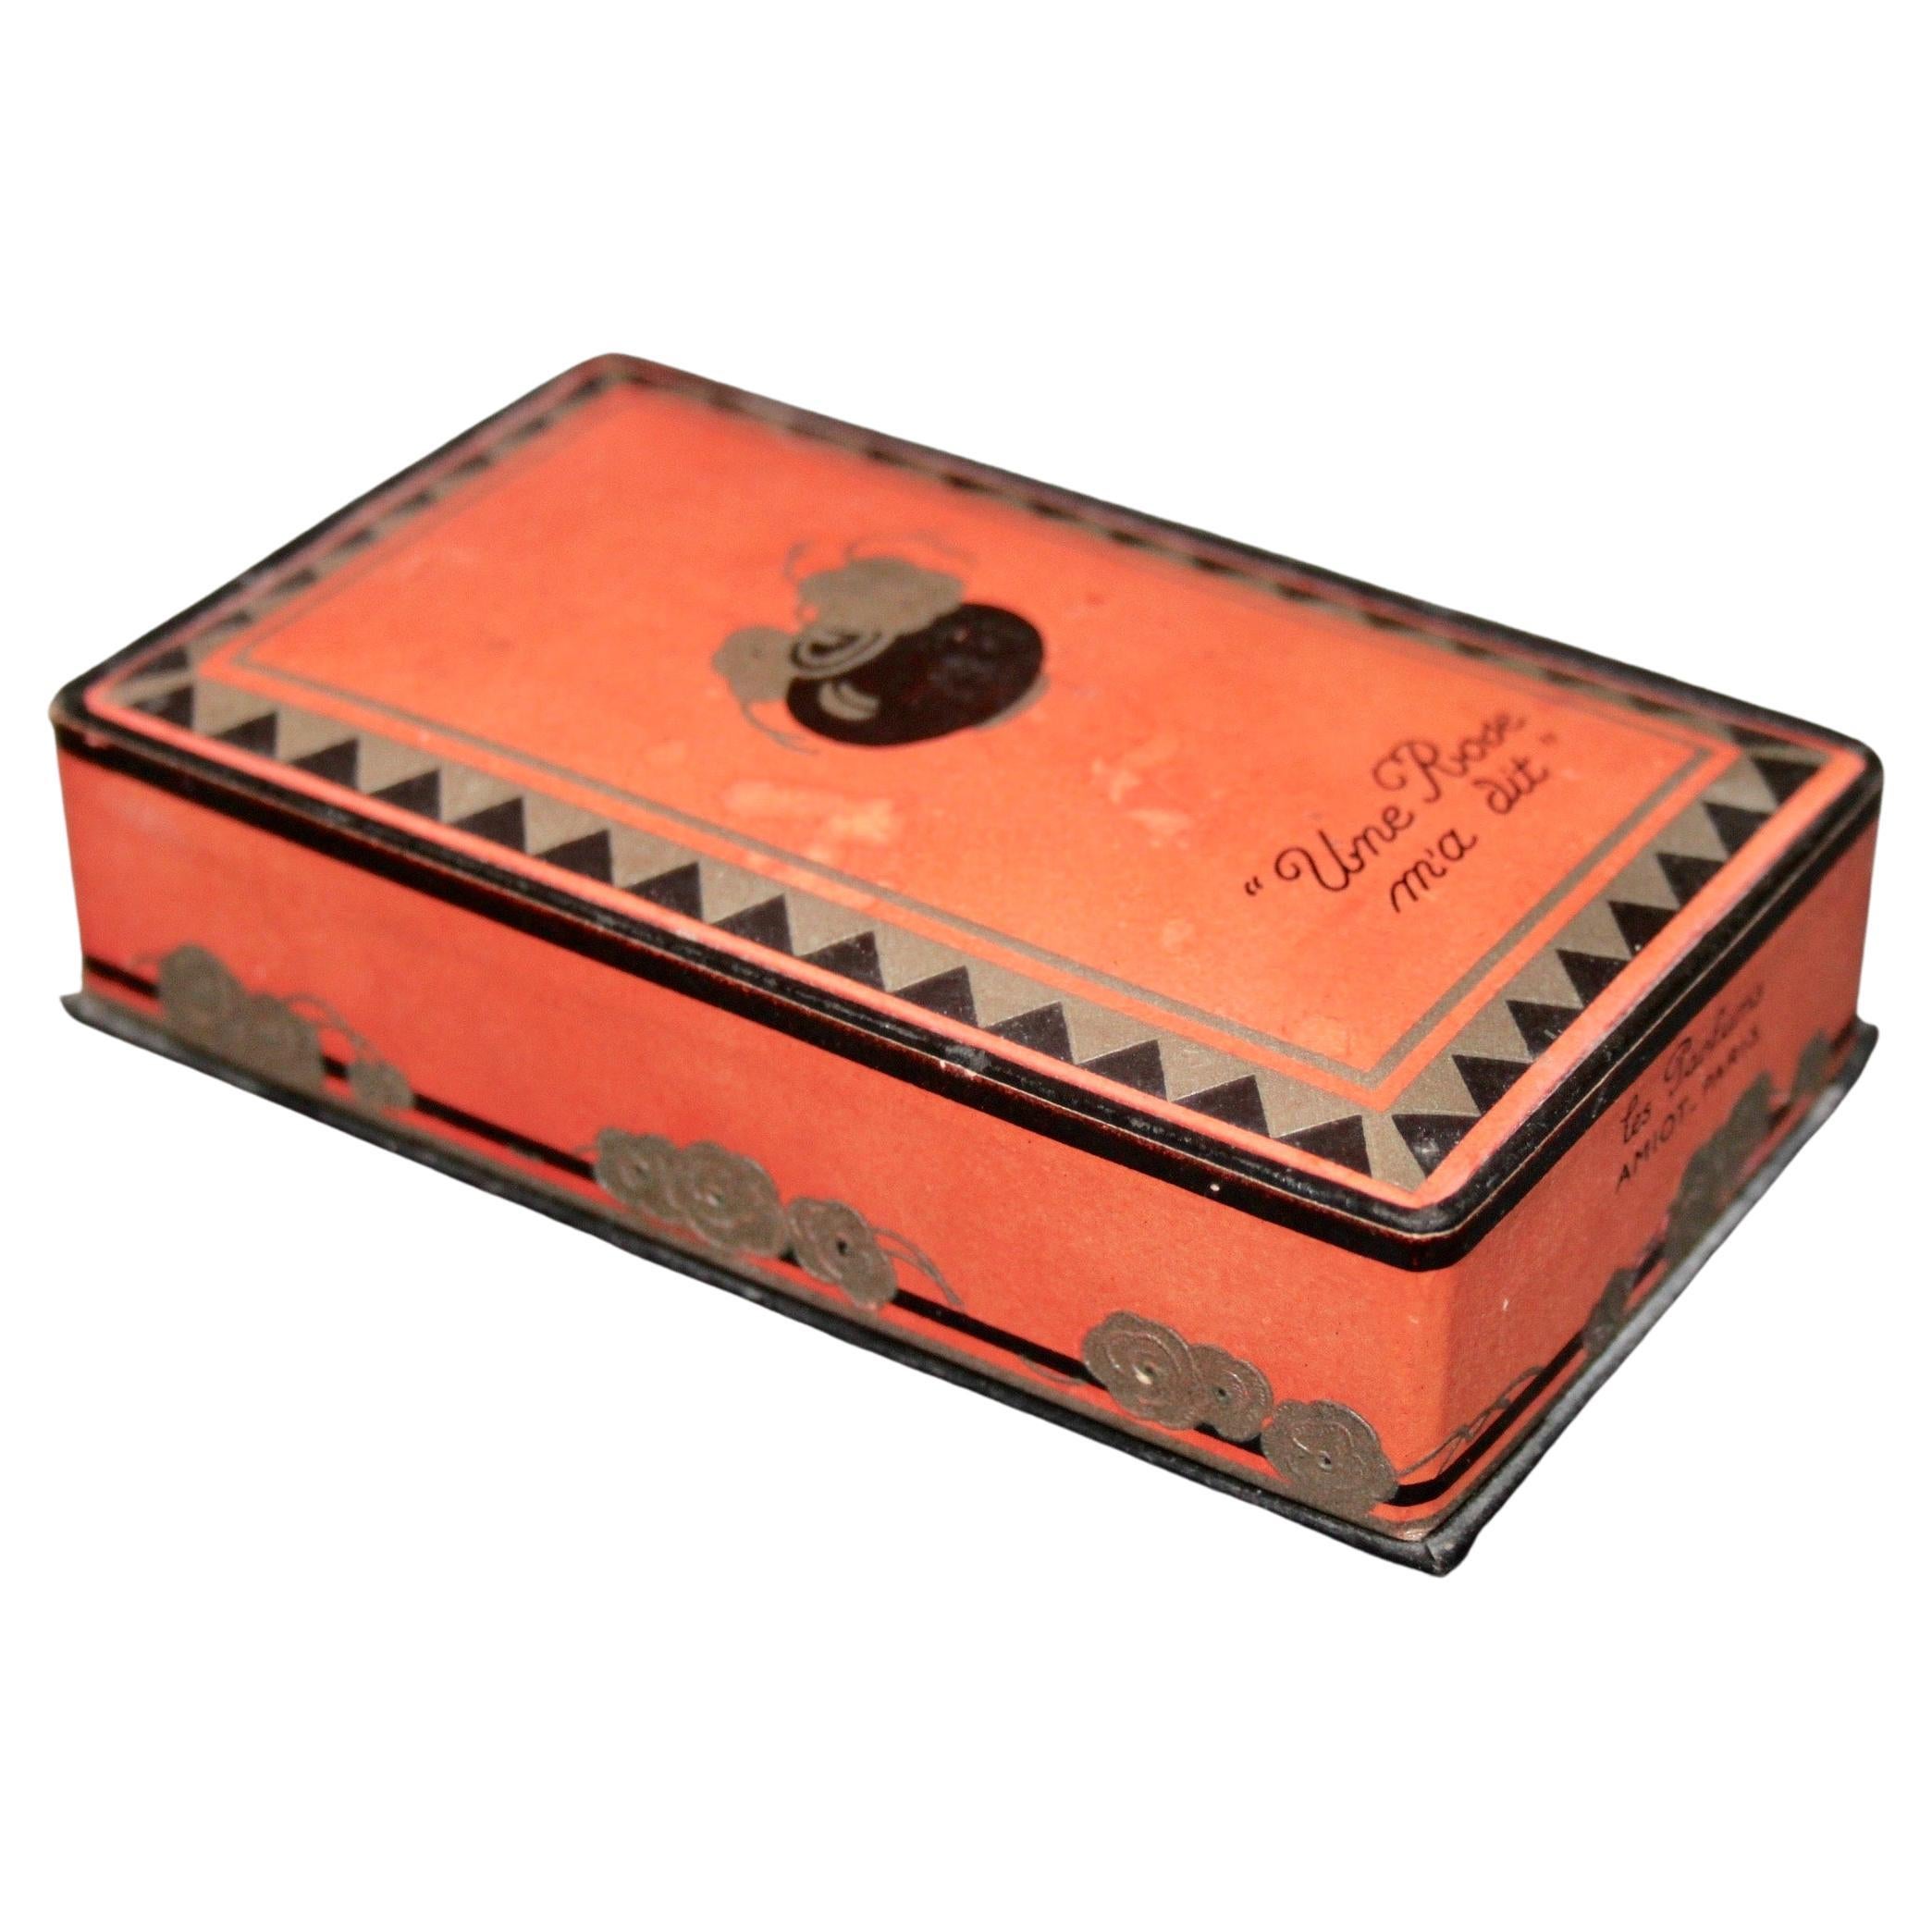 Perfume / Jewelry Carton Box by Amiot Paris